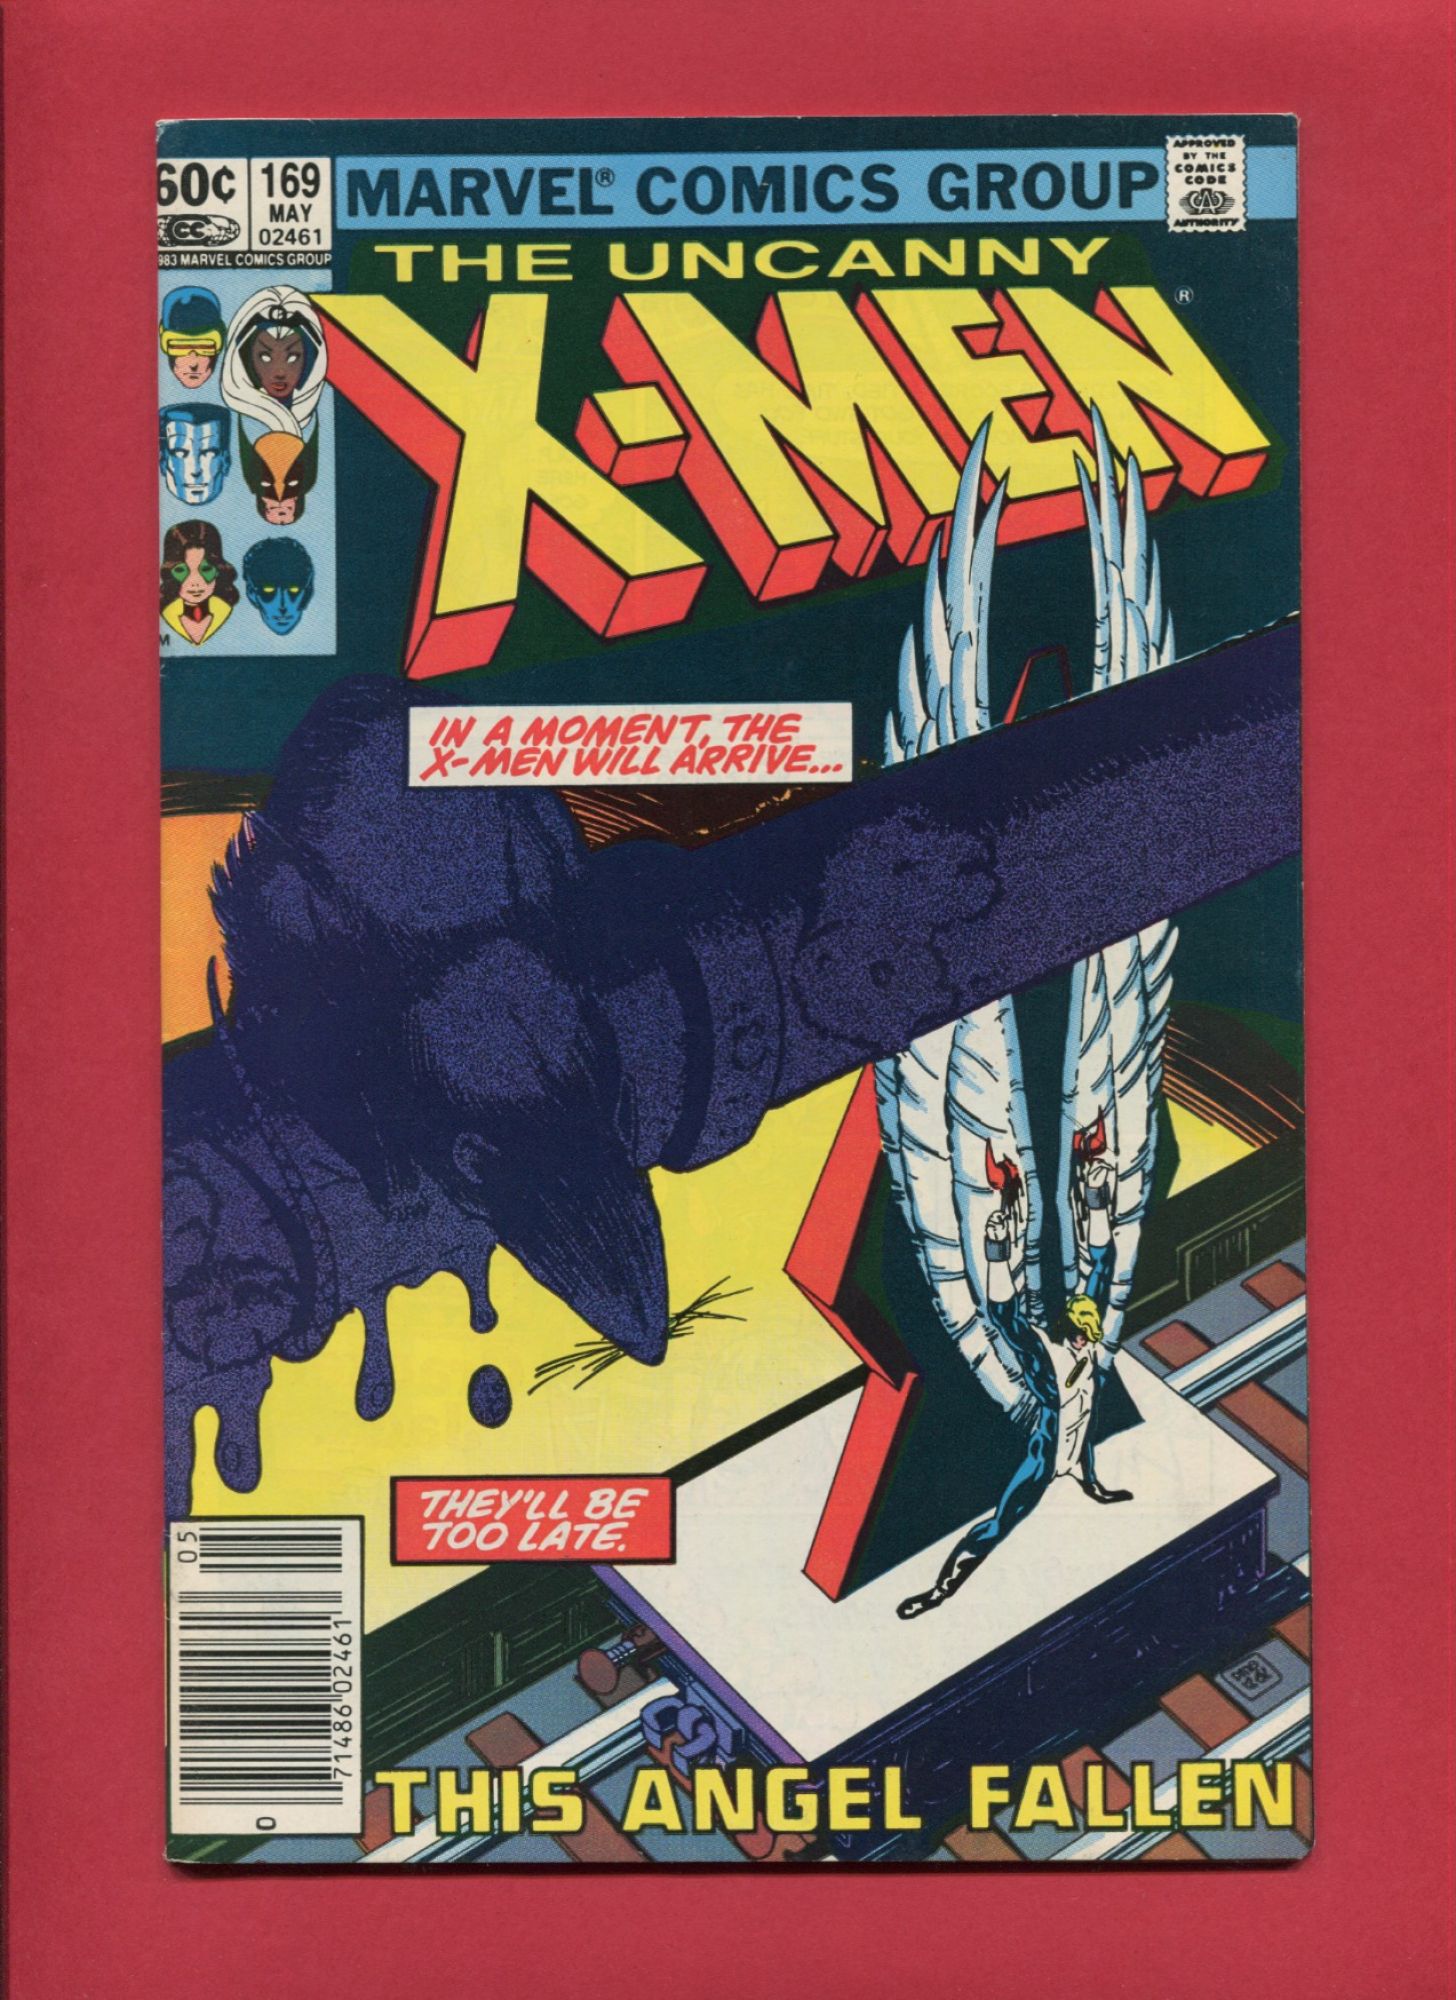 Uncanny X-Men #169, May 1983, 7.5 VF-